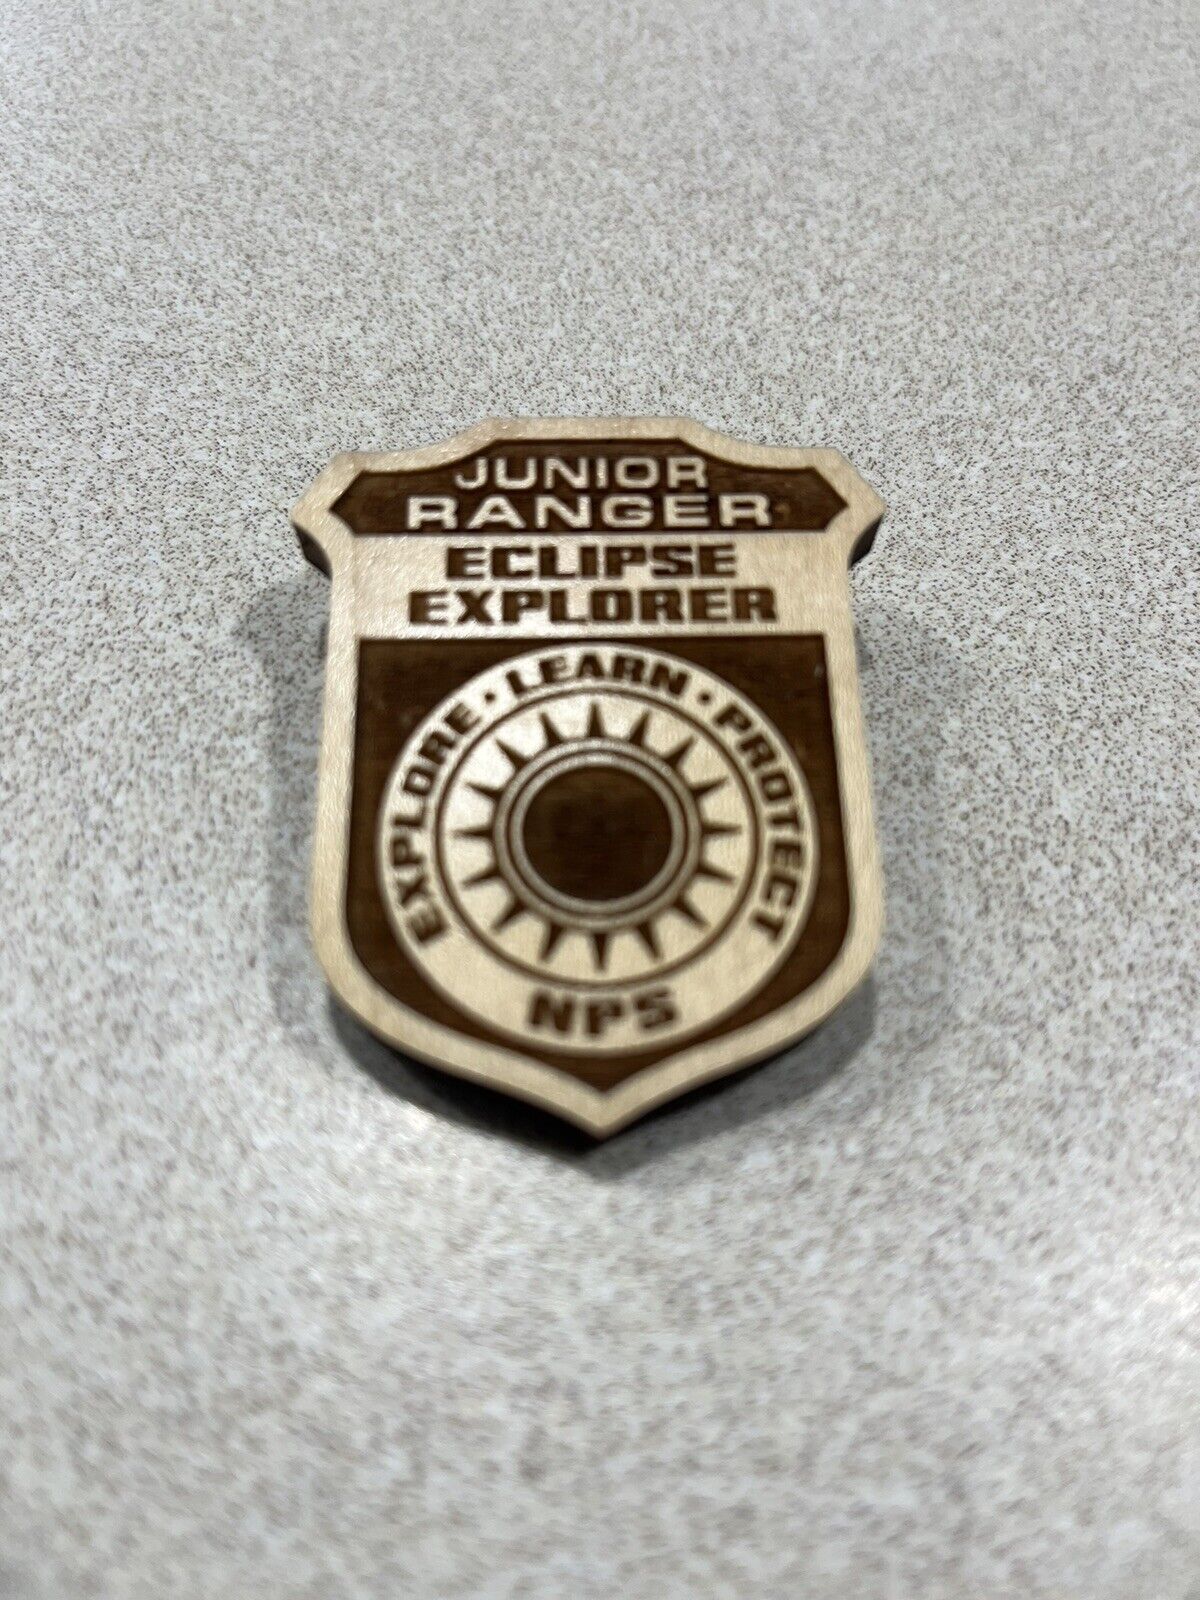 SPECIAL ISSUE Eclipse Explorer National Park - NPS Junior Ranger Badge